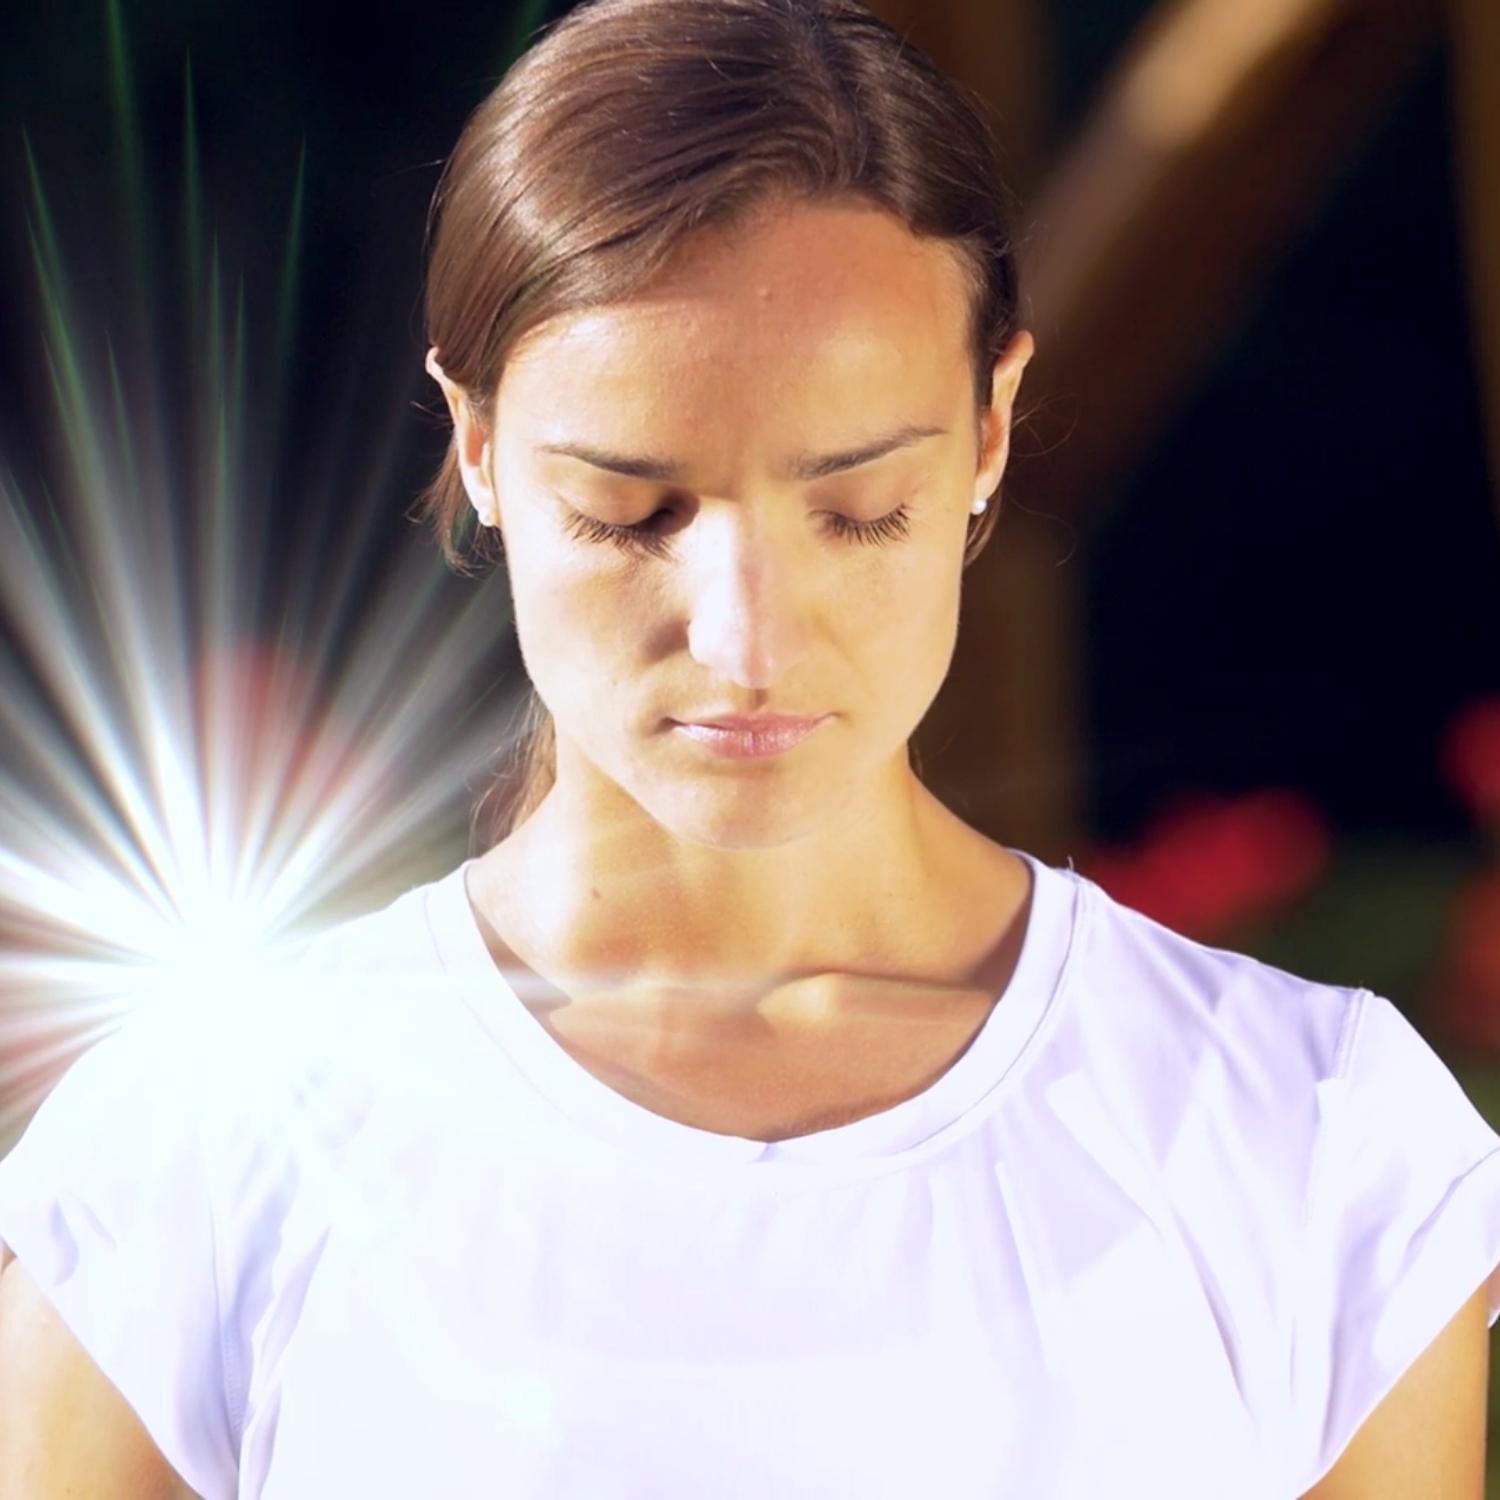 Reincarnation - Angelica Yoga - Course 2.9